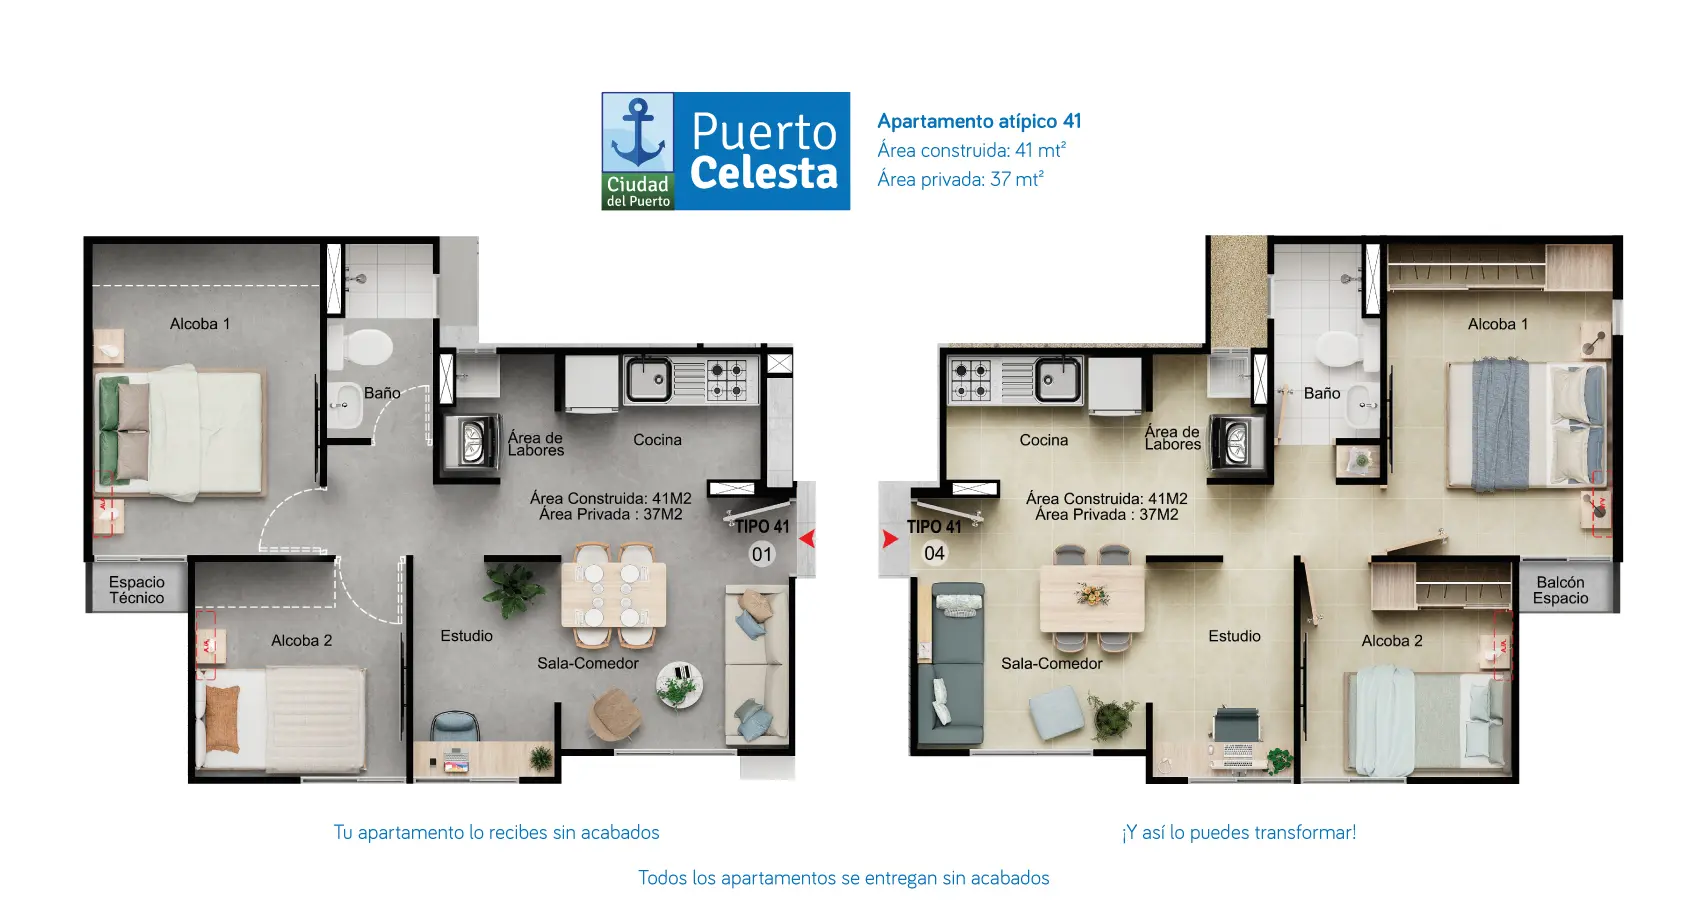 Apartamento tipo 41 - Puerto Celesta